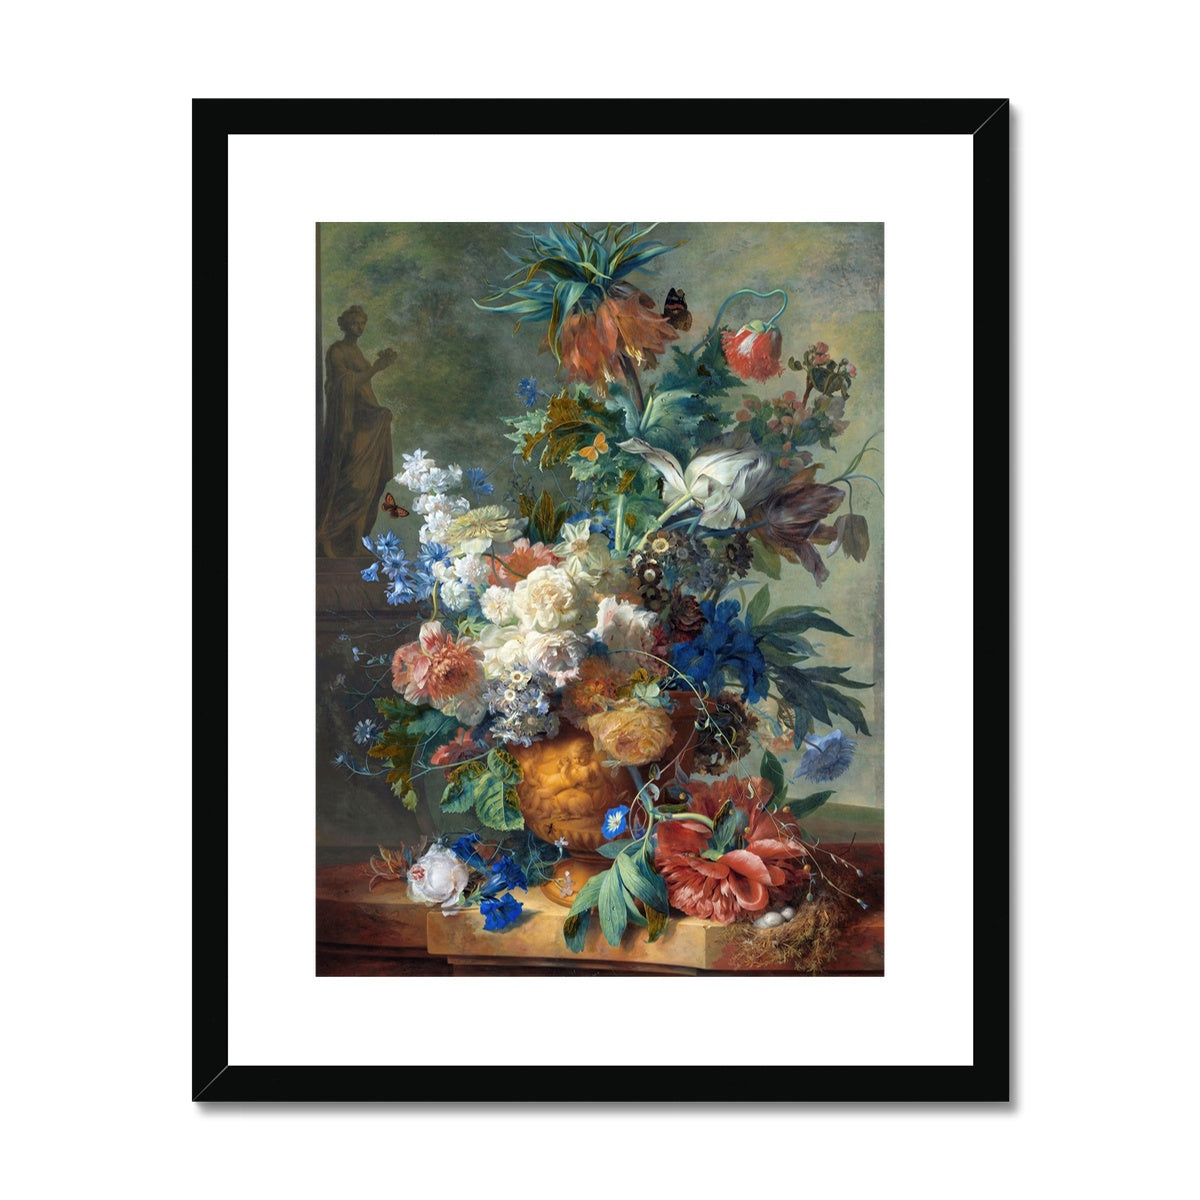 Jan van Huysum Framed Open Edition Art Print. 'Still Life with Flowers'. Art Gallery Historic Art